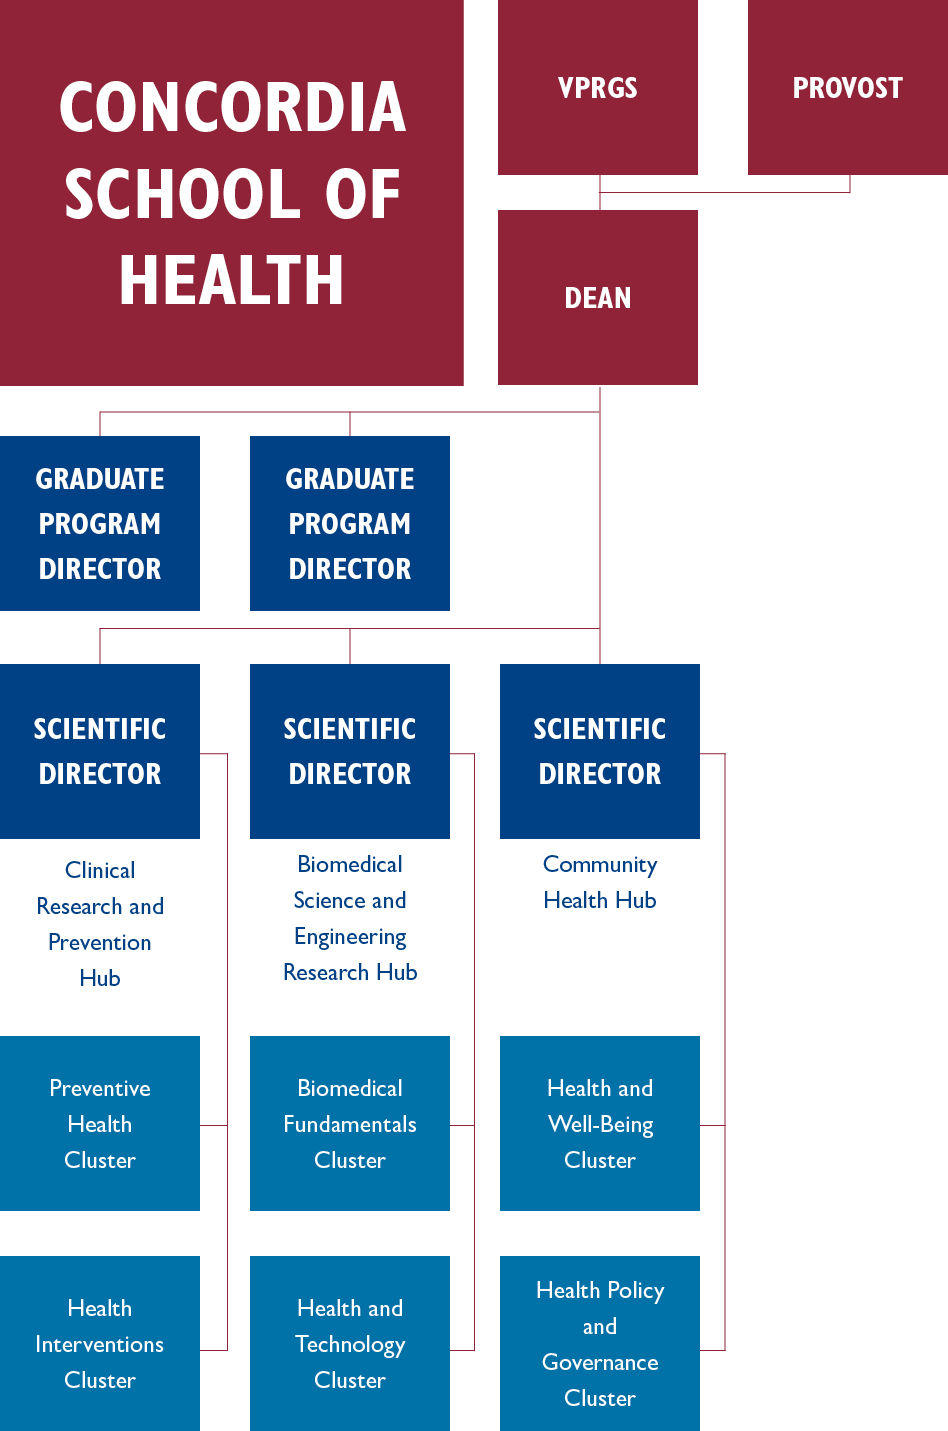 School of Health organizational chart